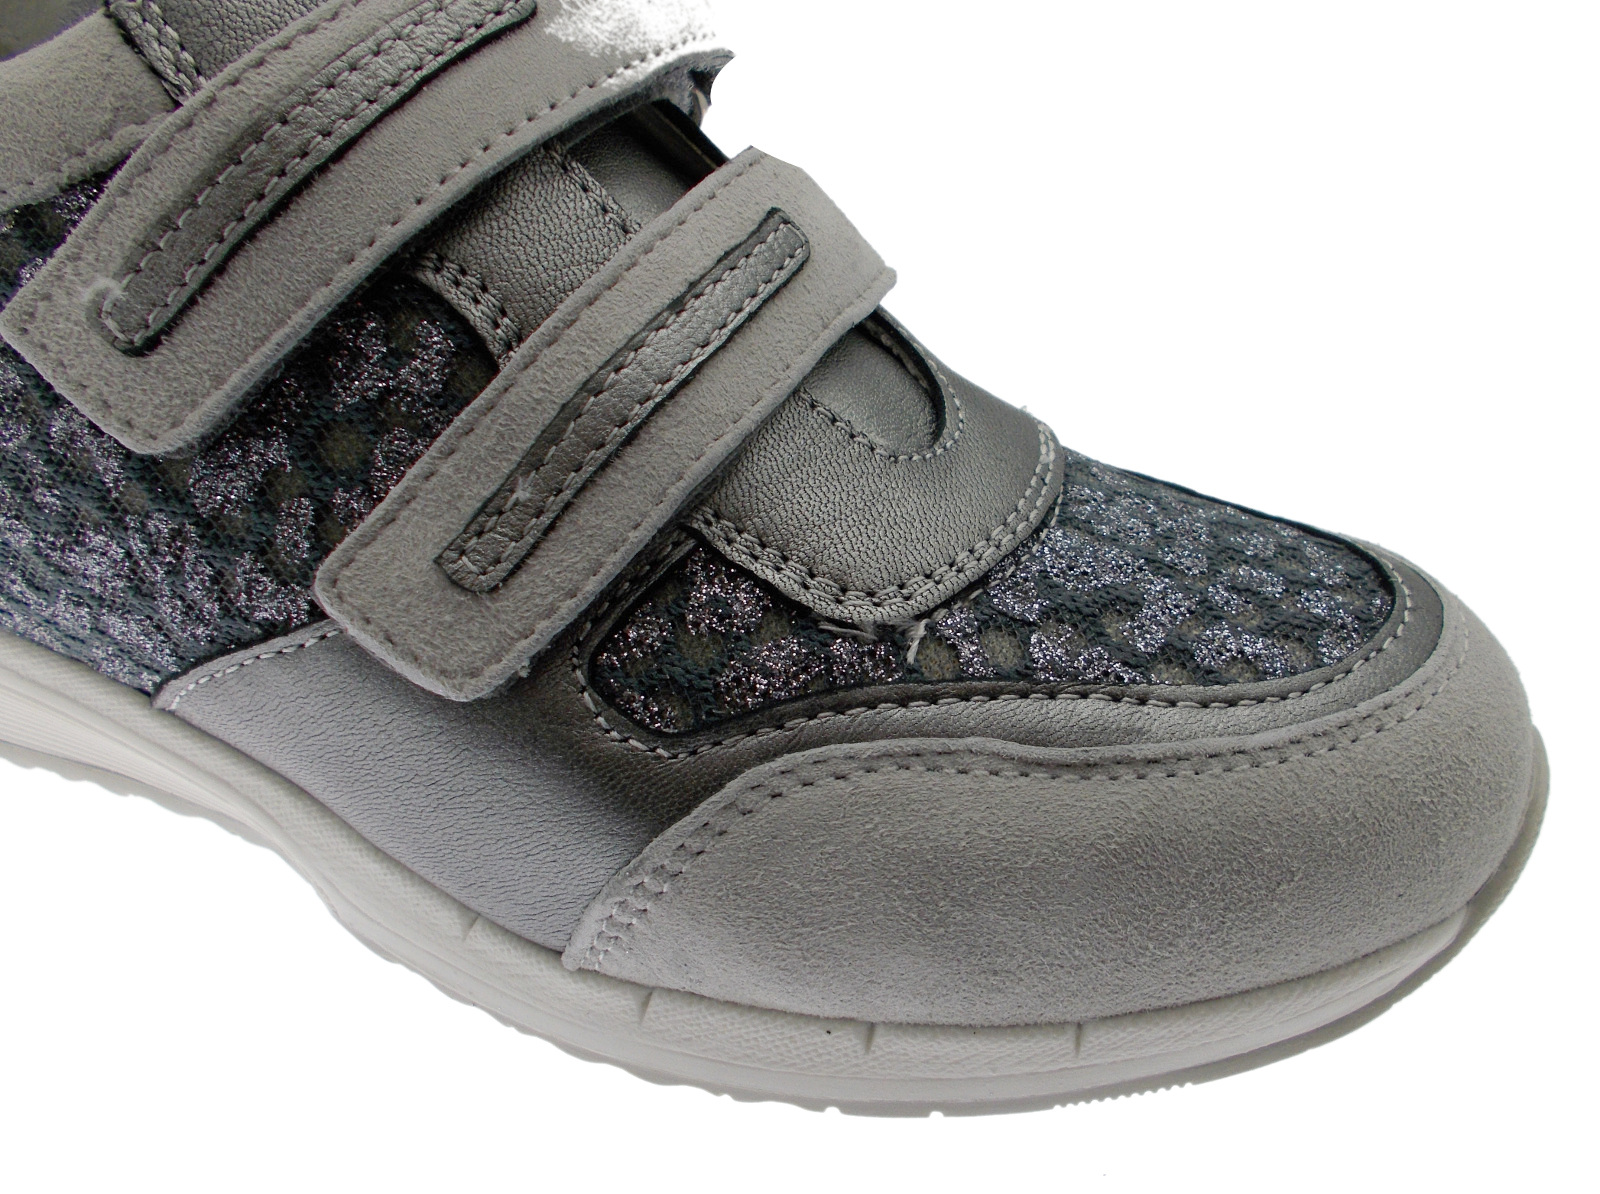 C3794 velcro gray orthopedic footbed sneaker prepared Loren | eBay